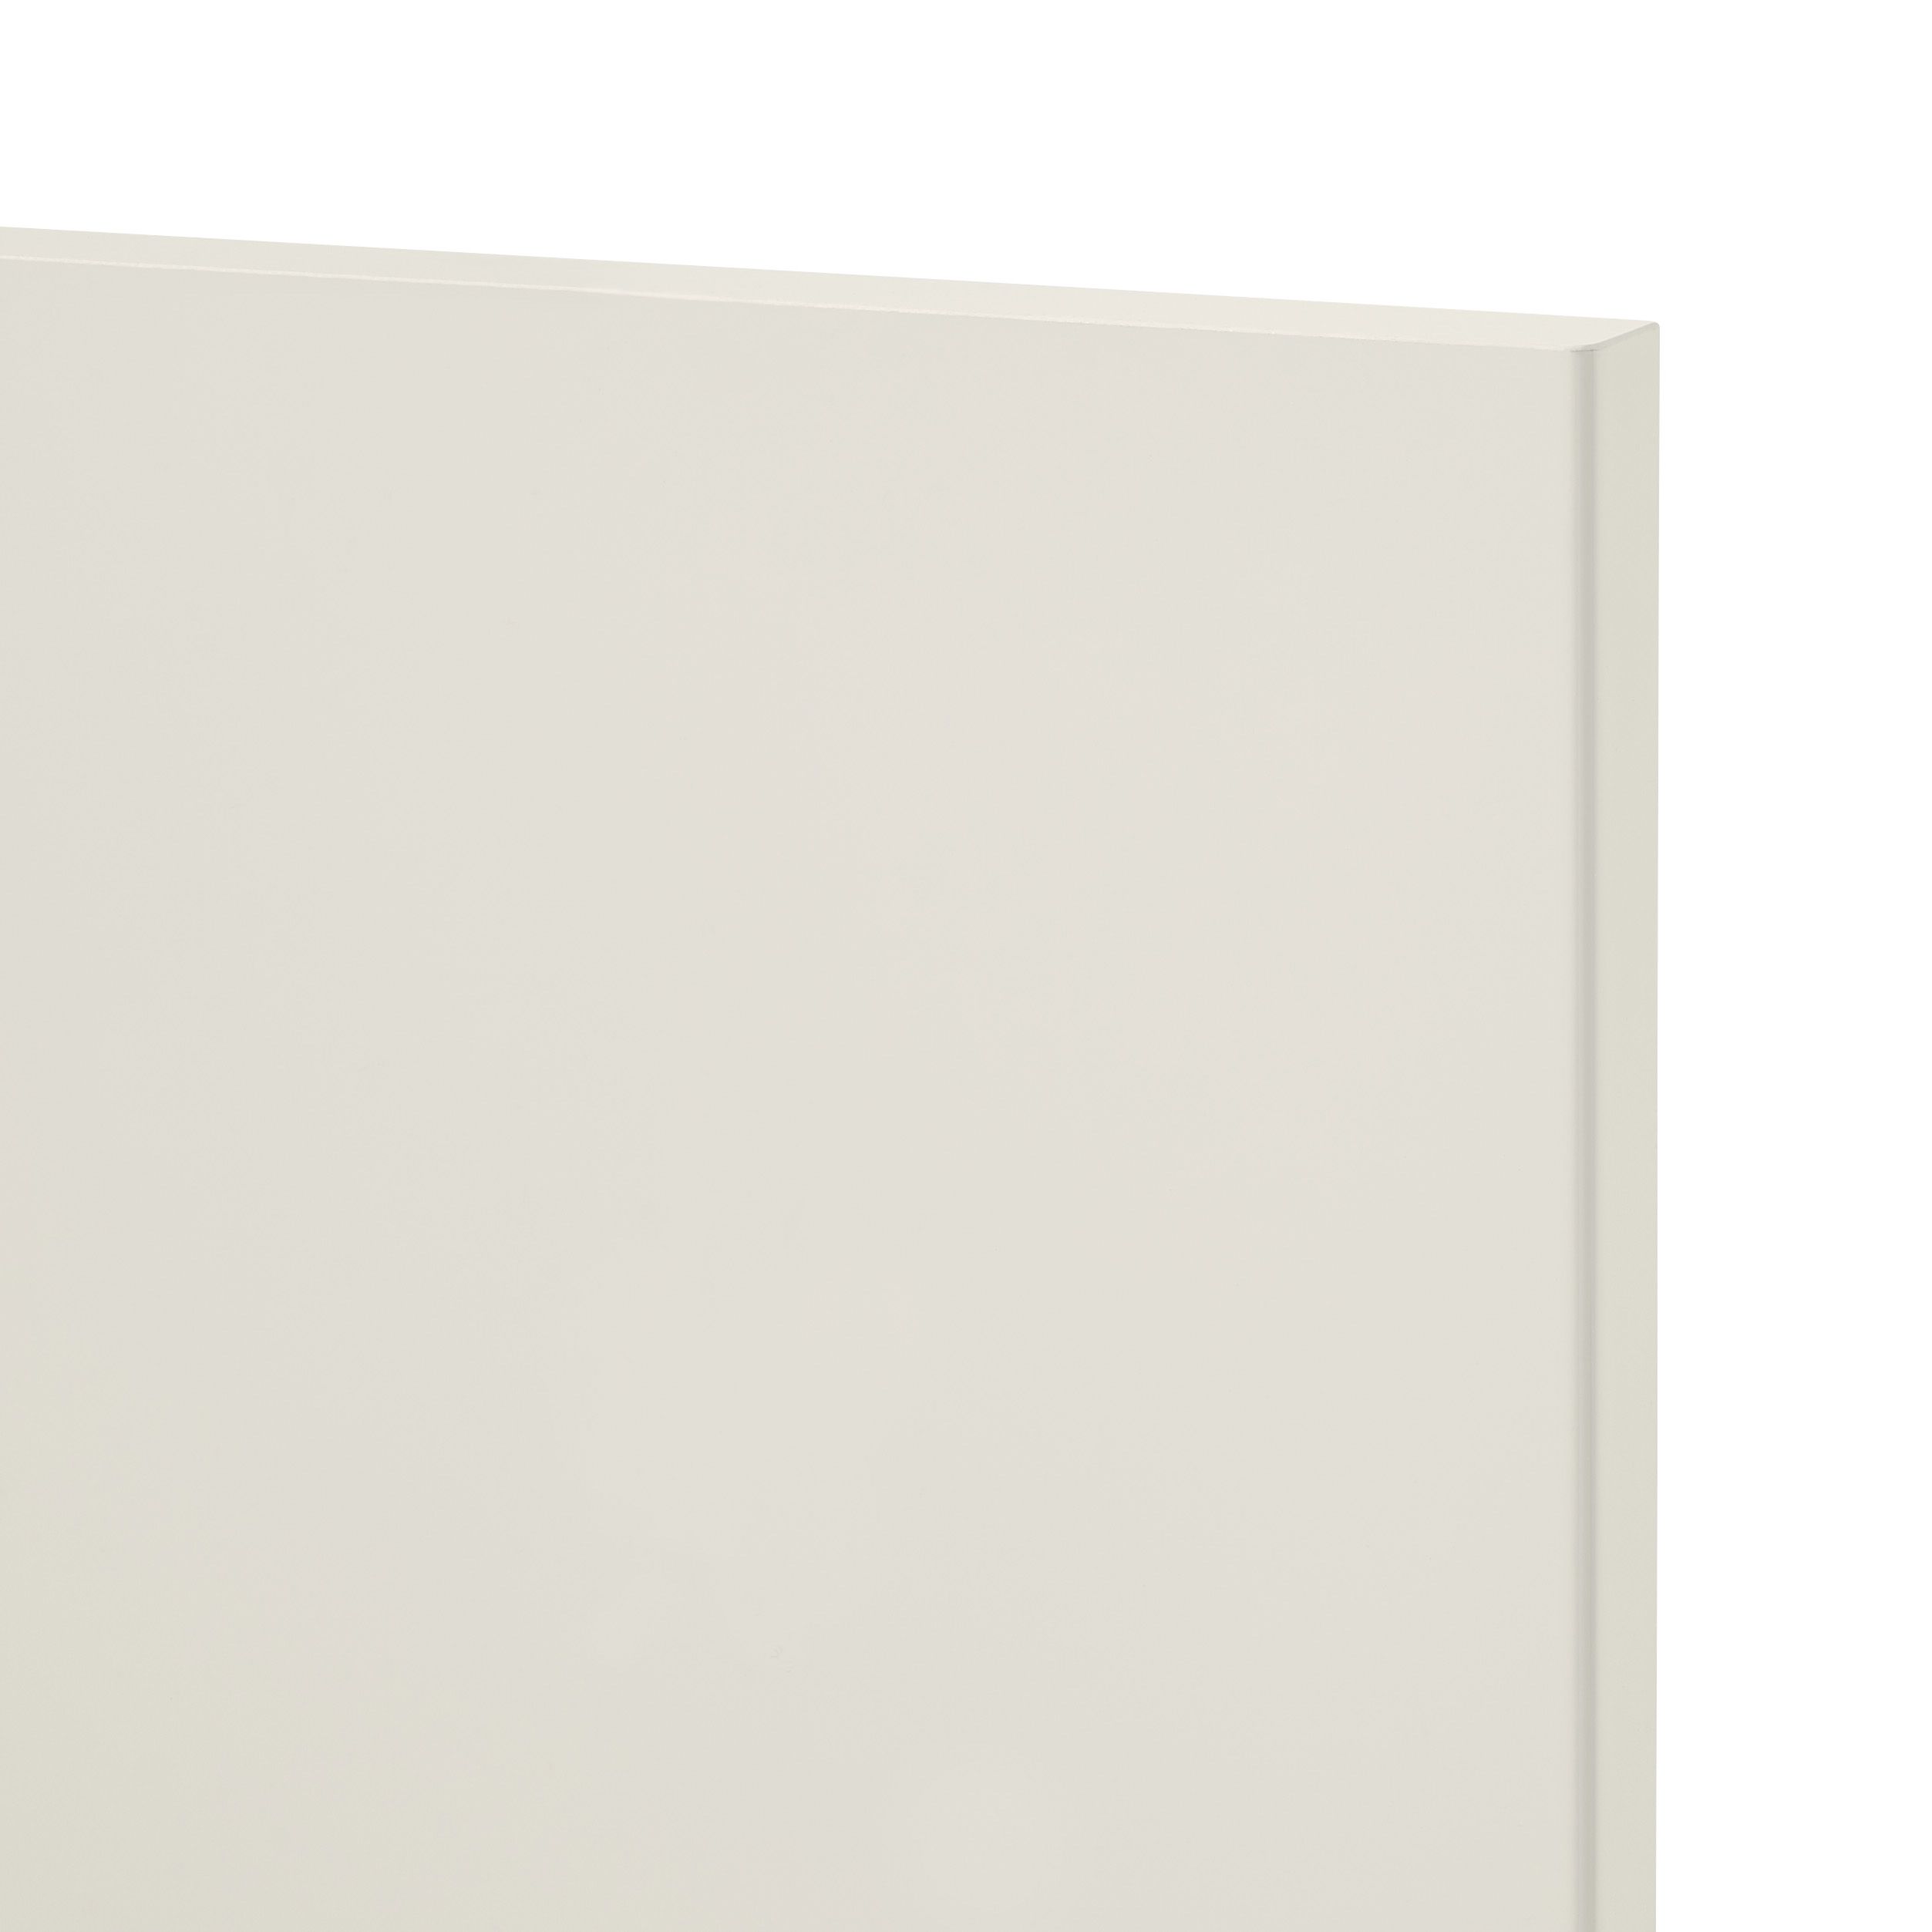 GoodHome Stevia Gloss cream slab Highline Cabinet door (W)150mm (H)715mm (T)18mm